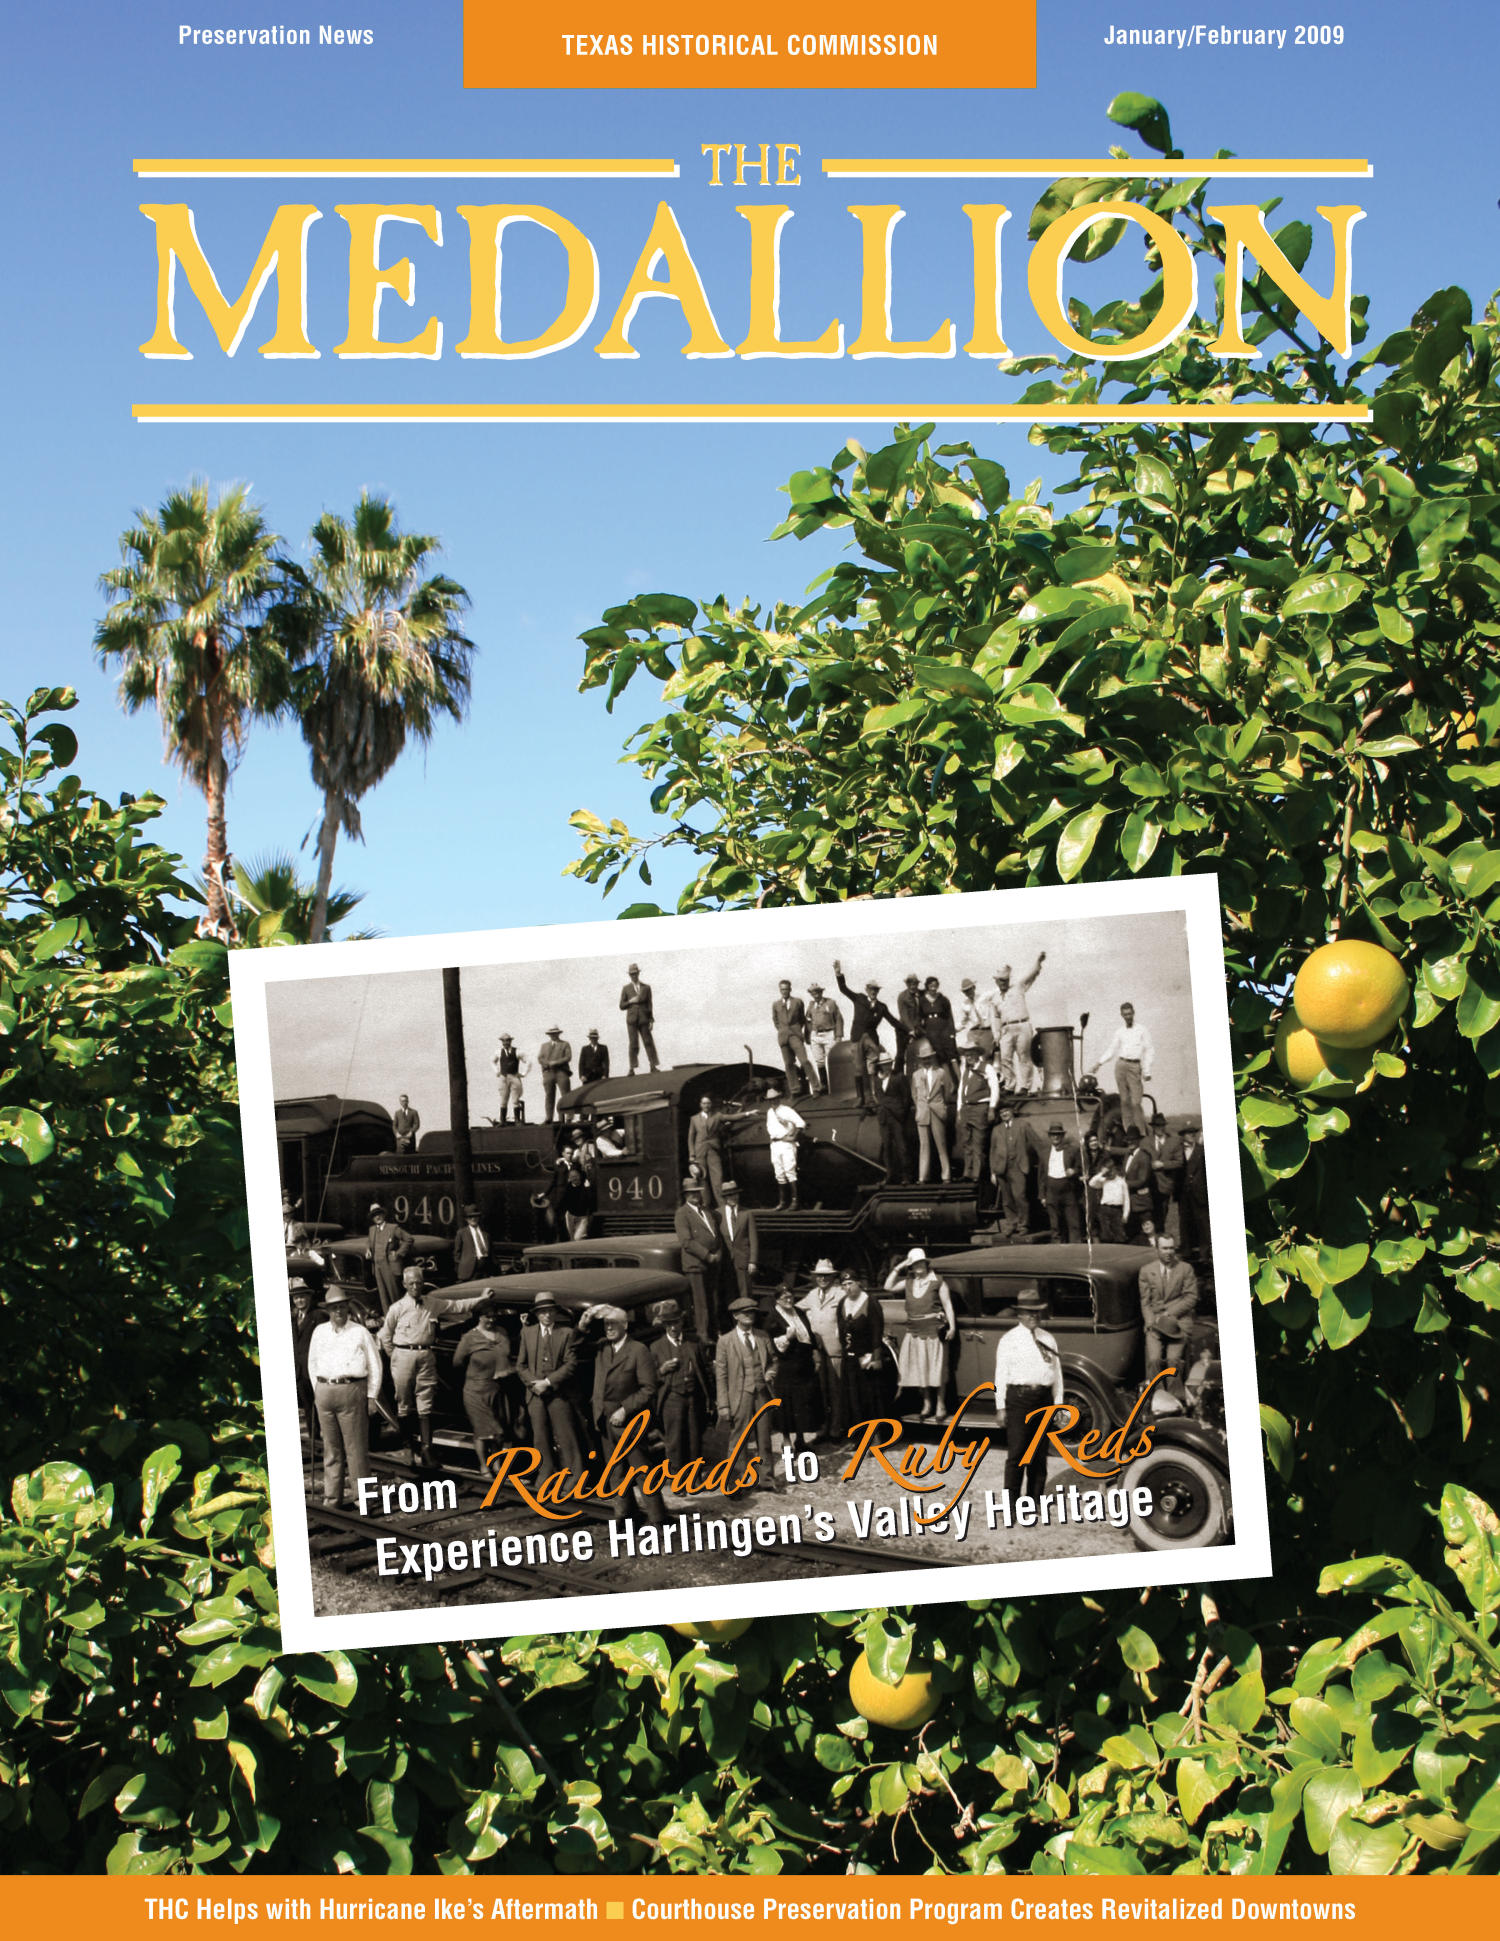 The Medallion, Volume 46, Number 1-2, January/February 2009
                                                
                                                    1
                                                